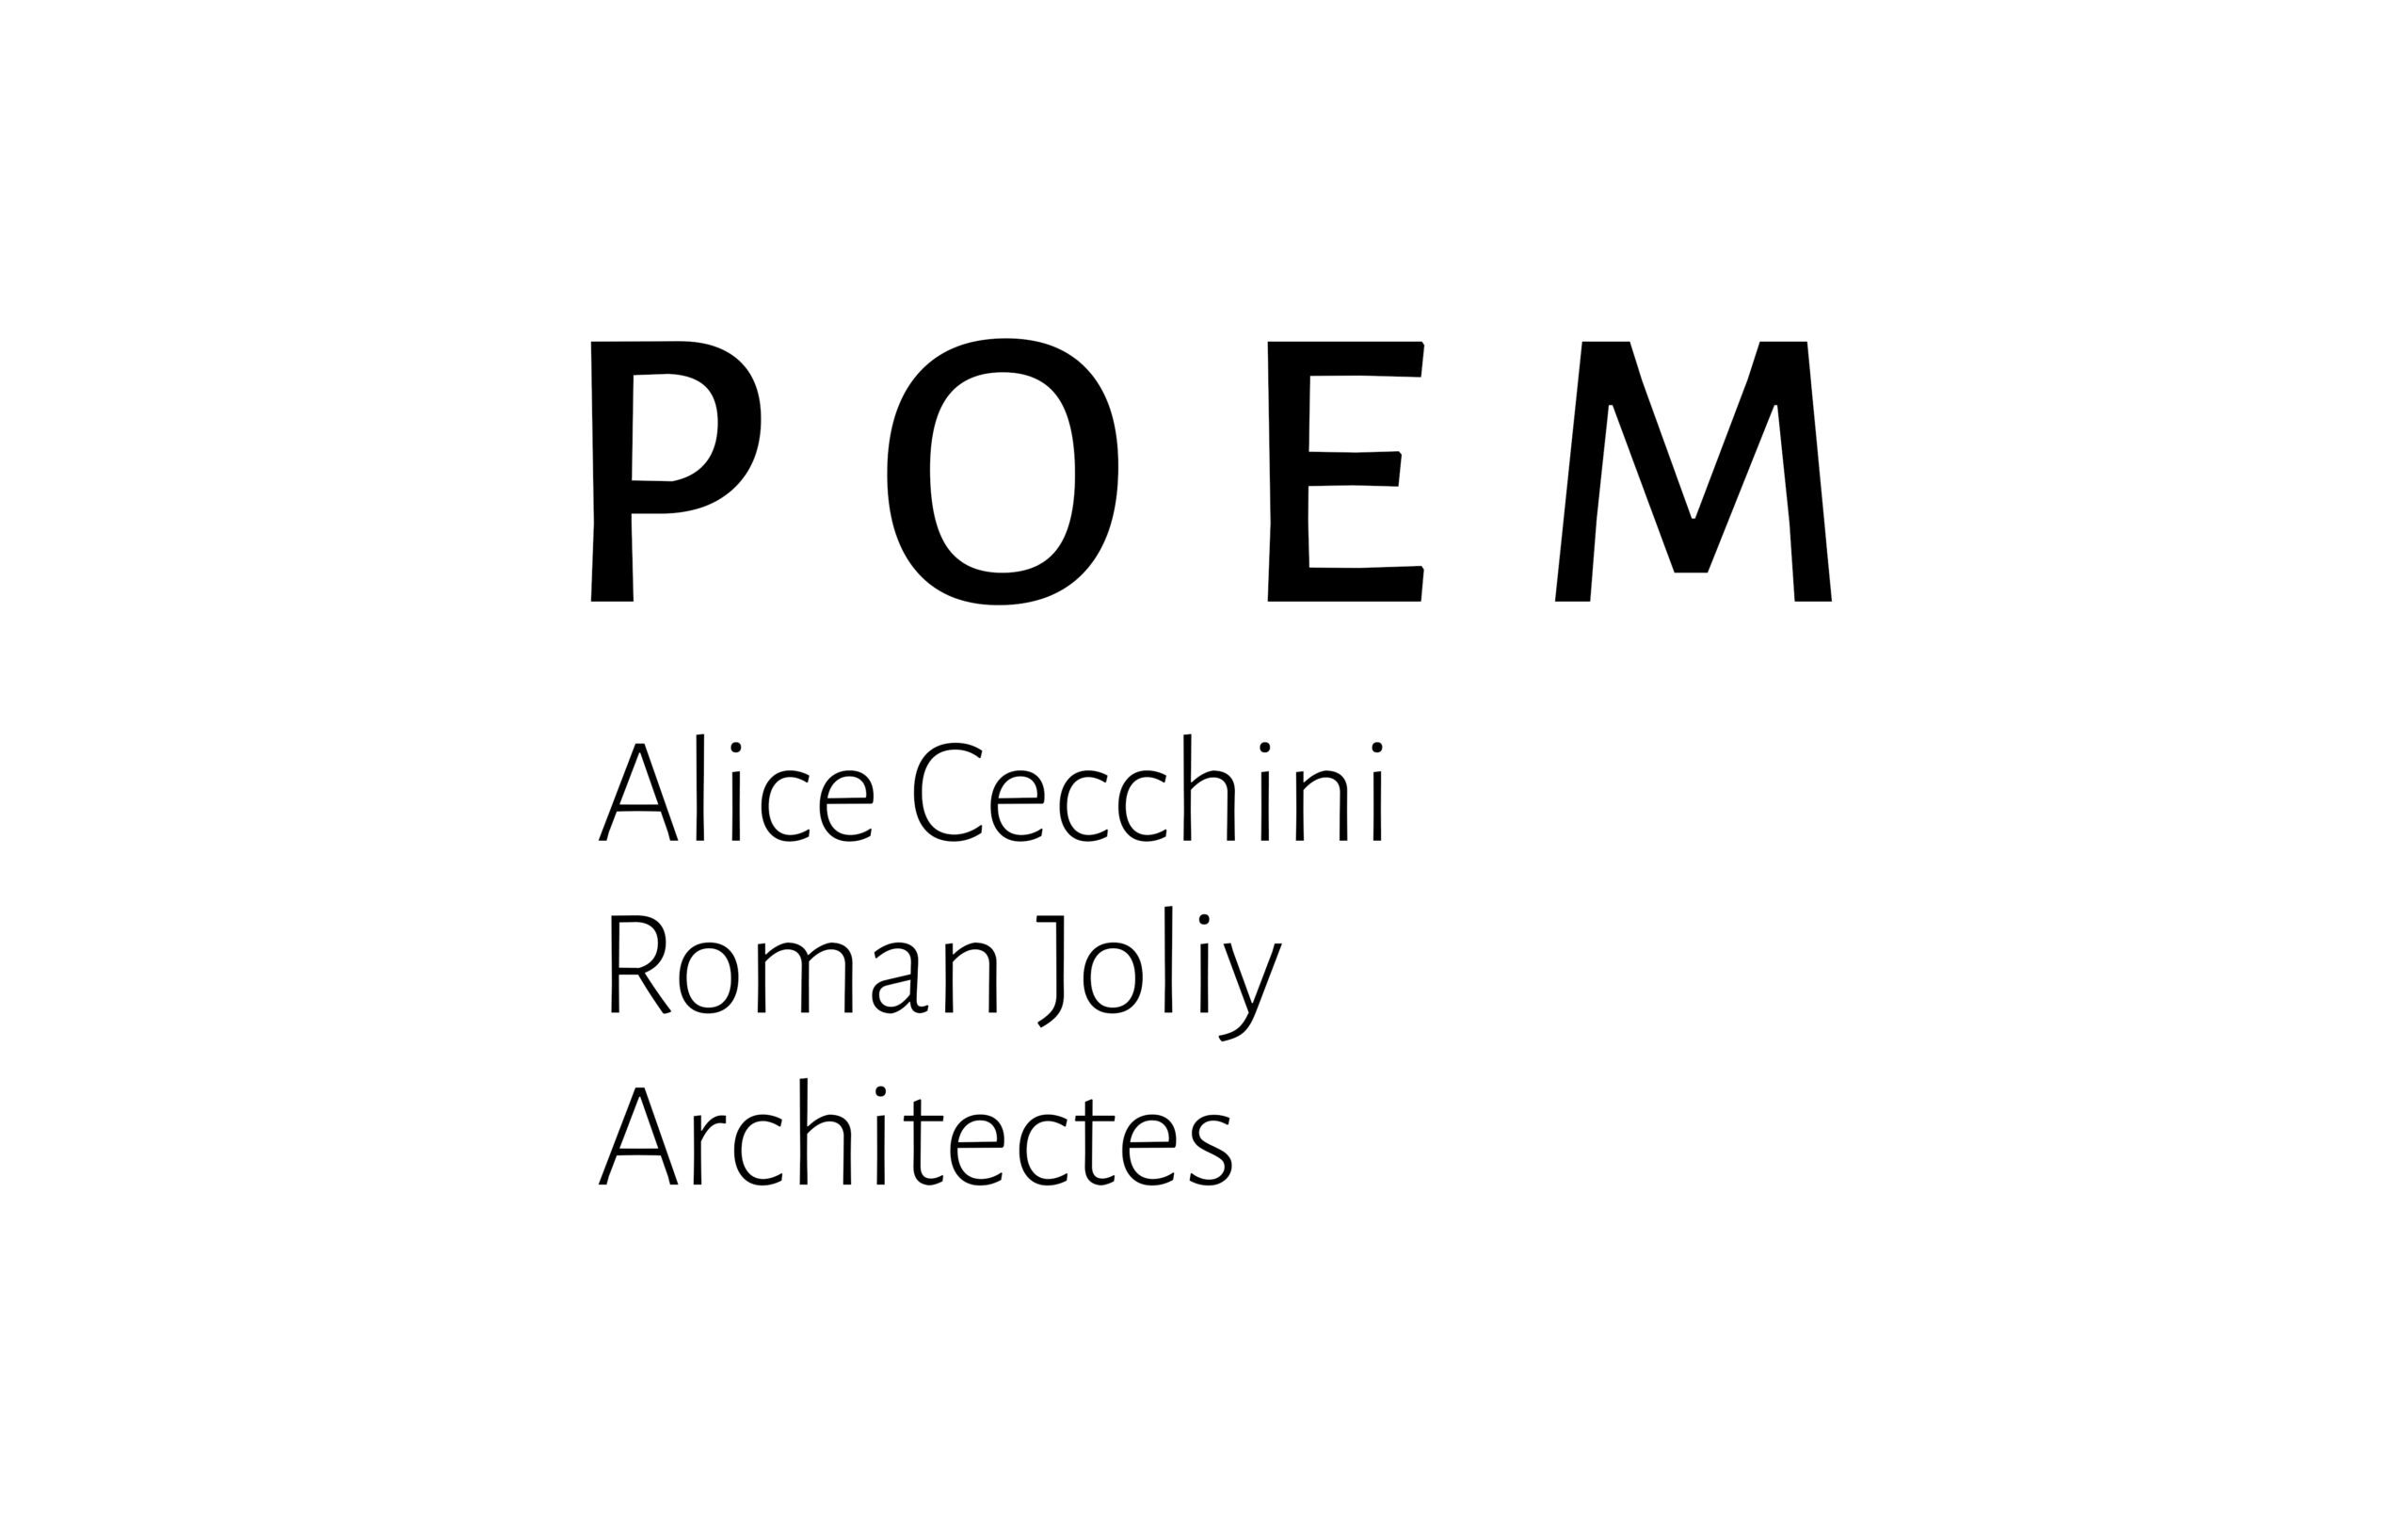 POEM Architectes – Alice Cecchini Roman Joliy